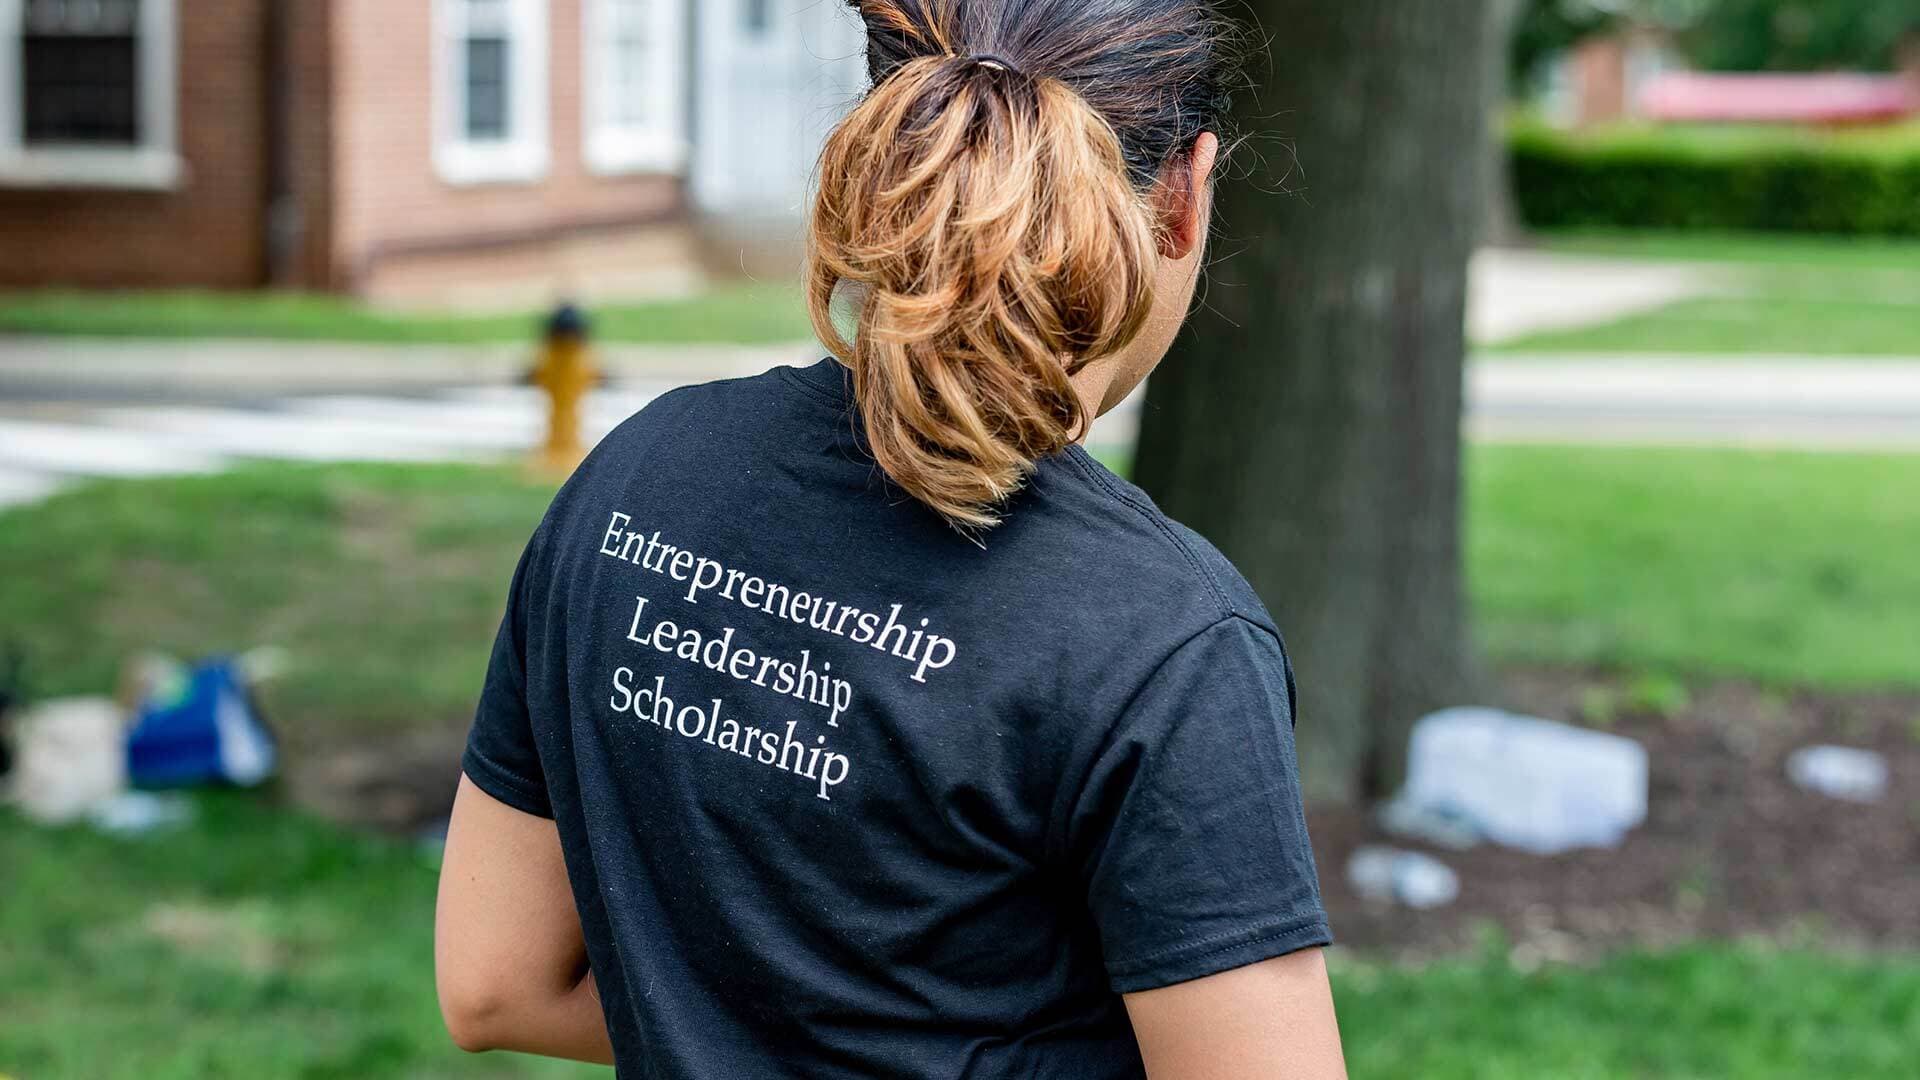 Black T-shirt that reads, "Entrepreneurship, Leadership, Scholarship" on the back